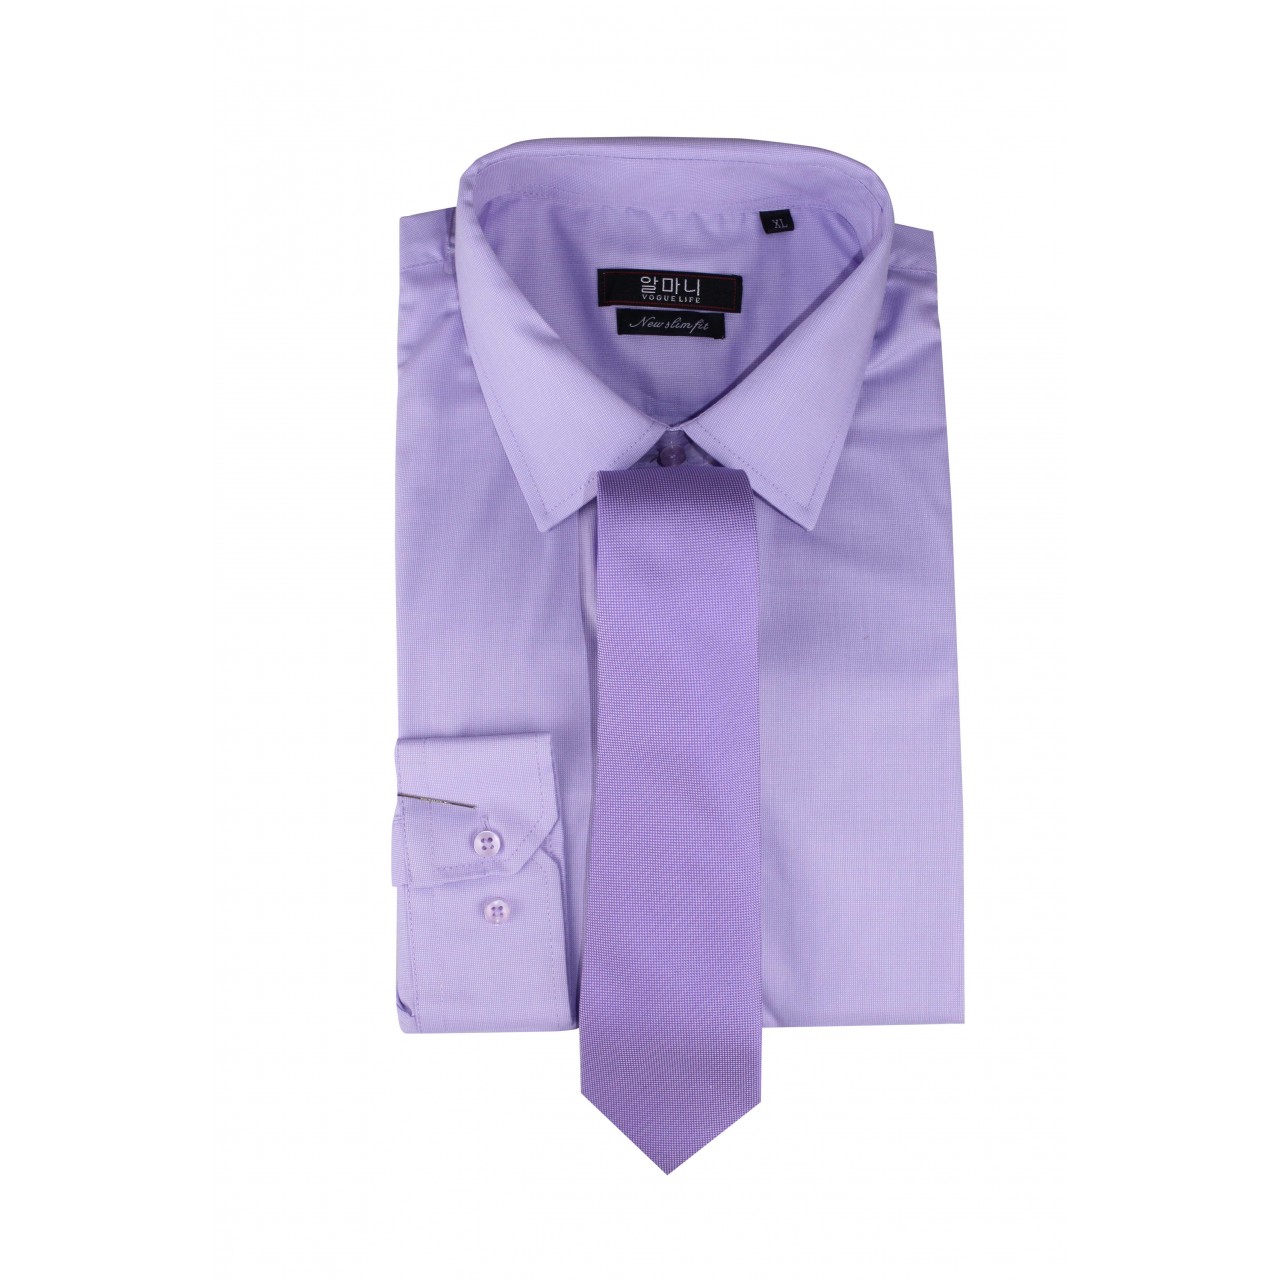 Vogue Life Clothing Formal Cotton Pure Violet Shirt And Tie Set Mens